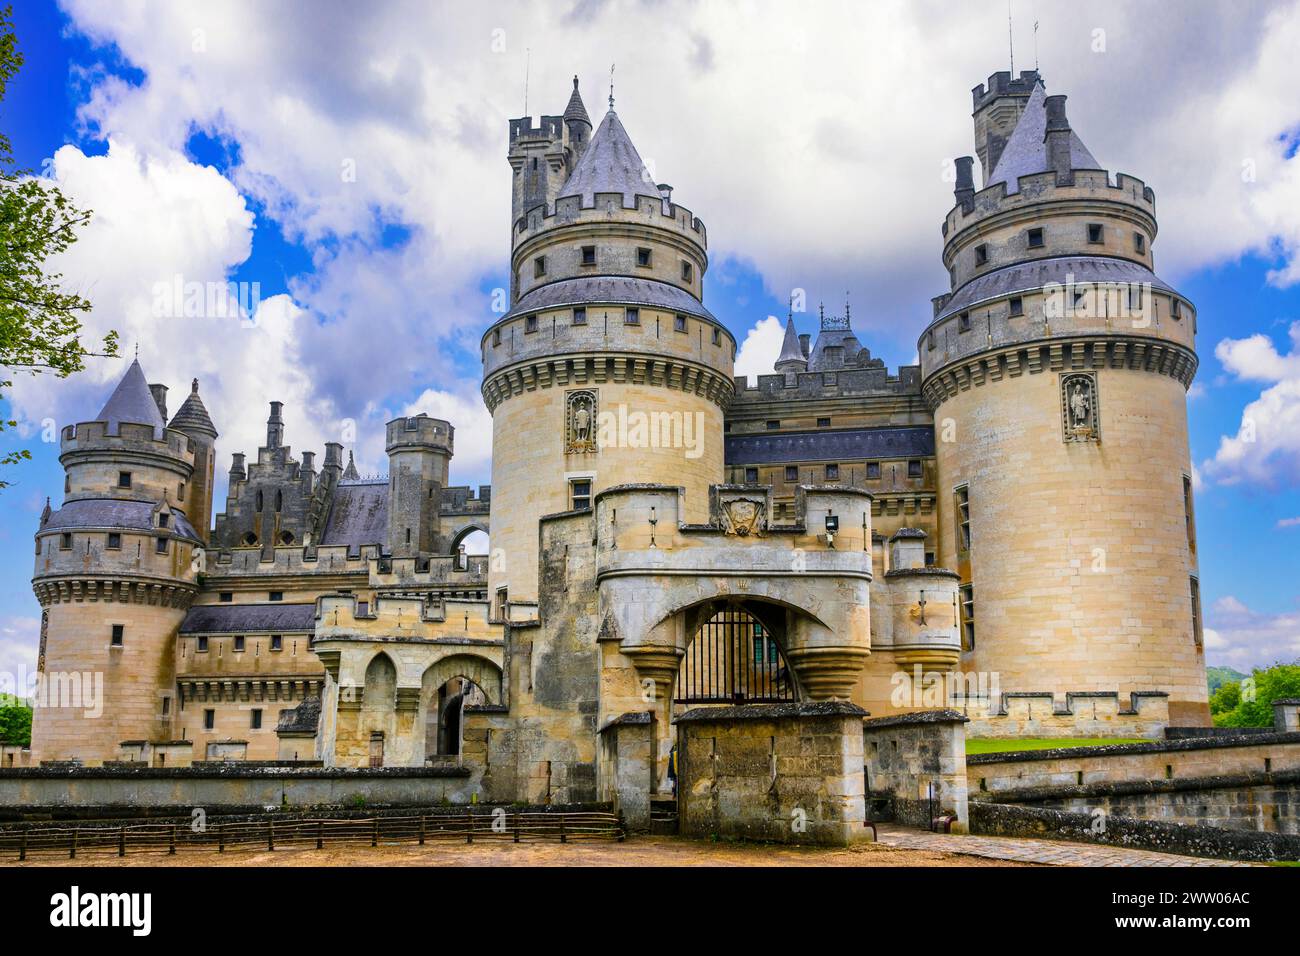 Famosi castelli francesi - impressionante castello medievale Pierrefonds. Francia Foto Stock